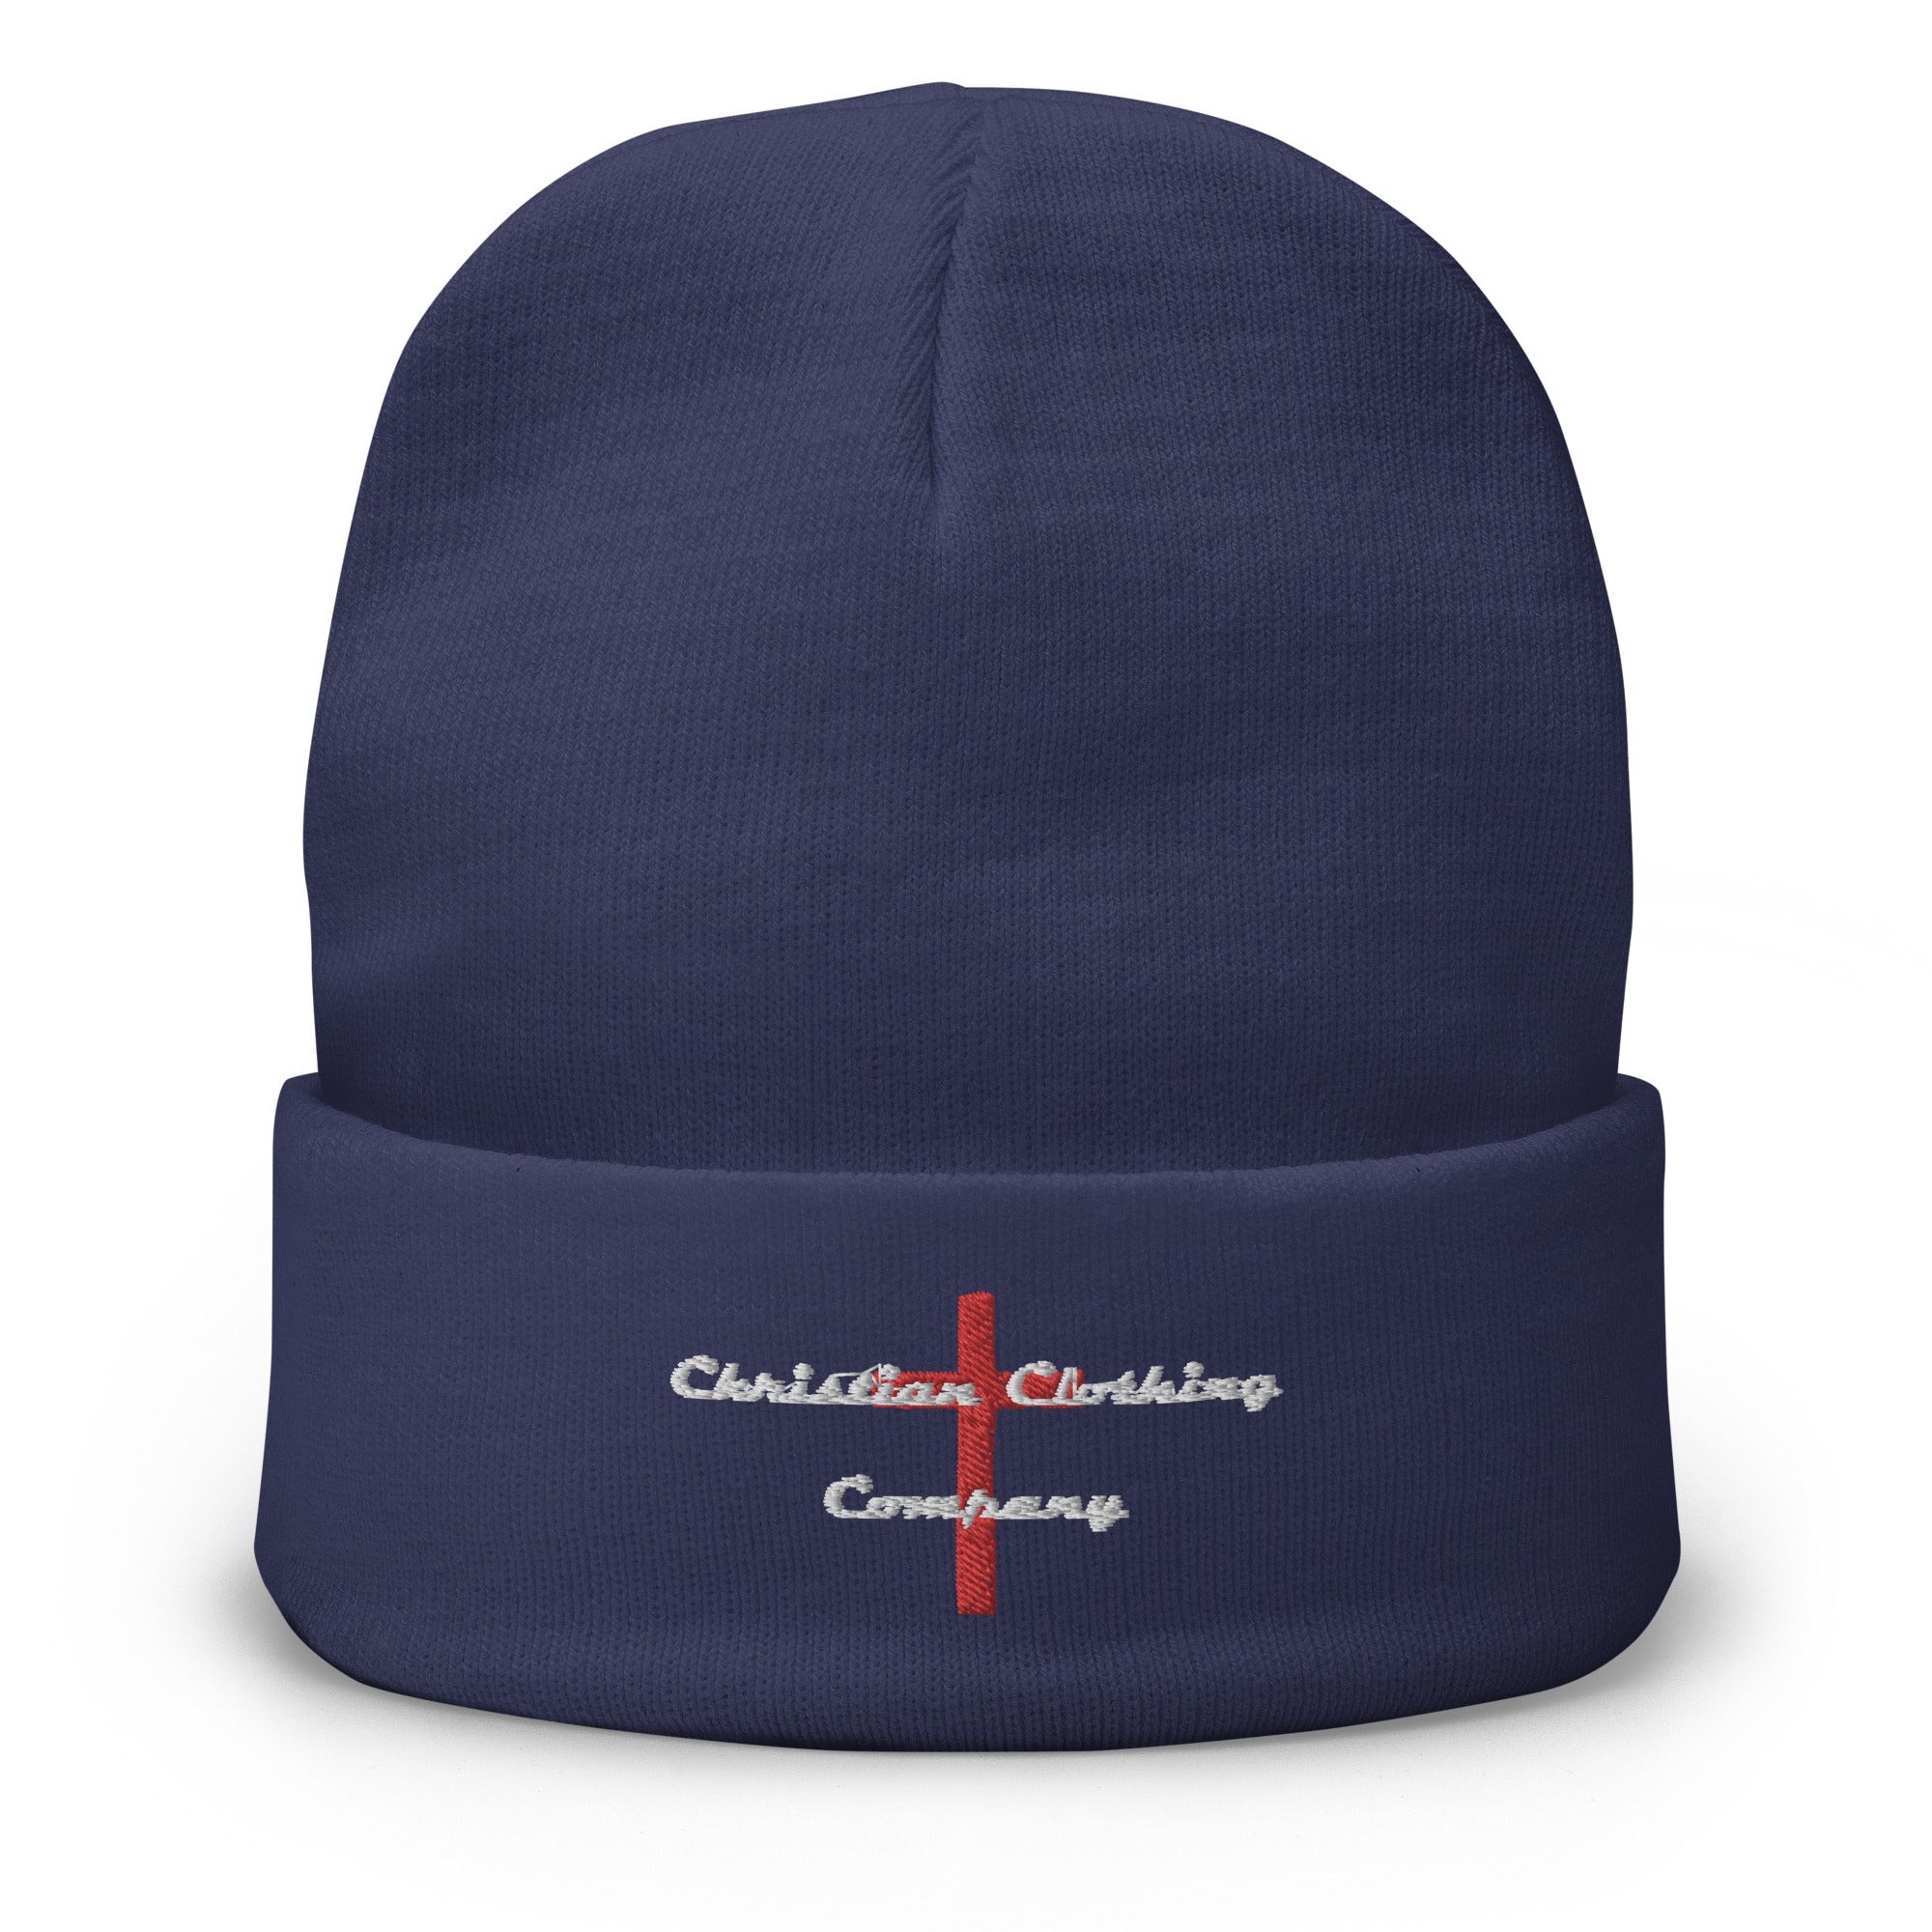 Christian Clothing Company Cross Beanie